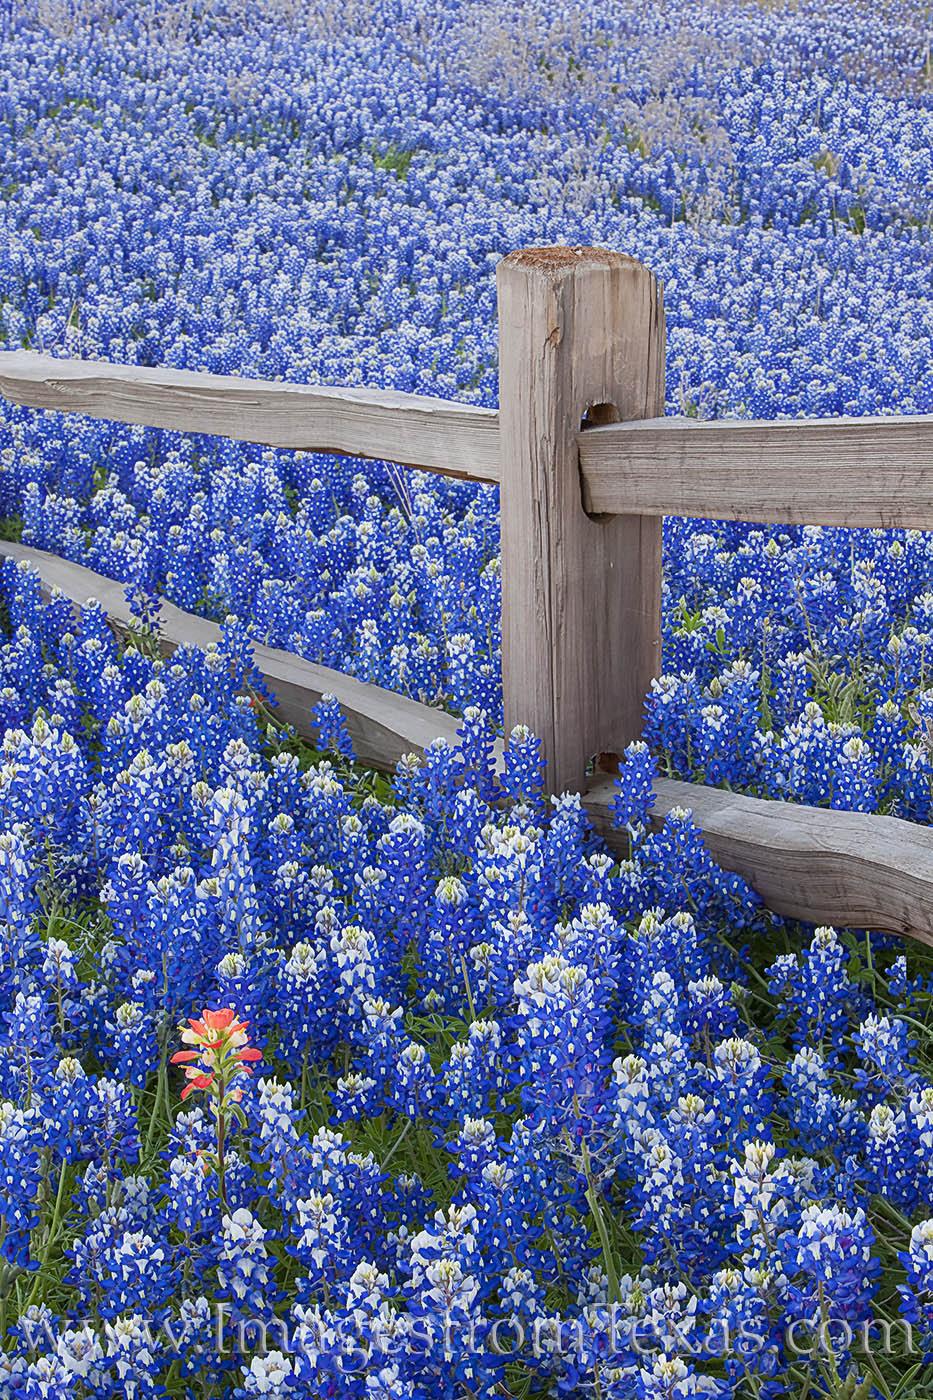 texas hill country. Rob Greebon Photo Blog